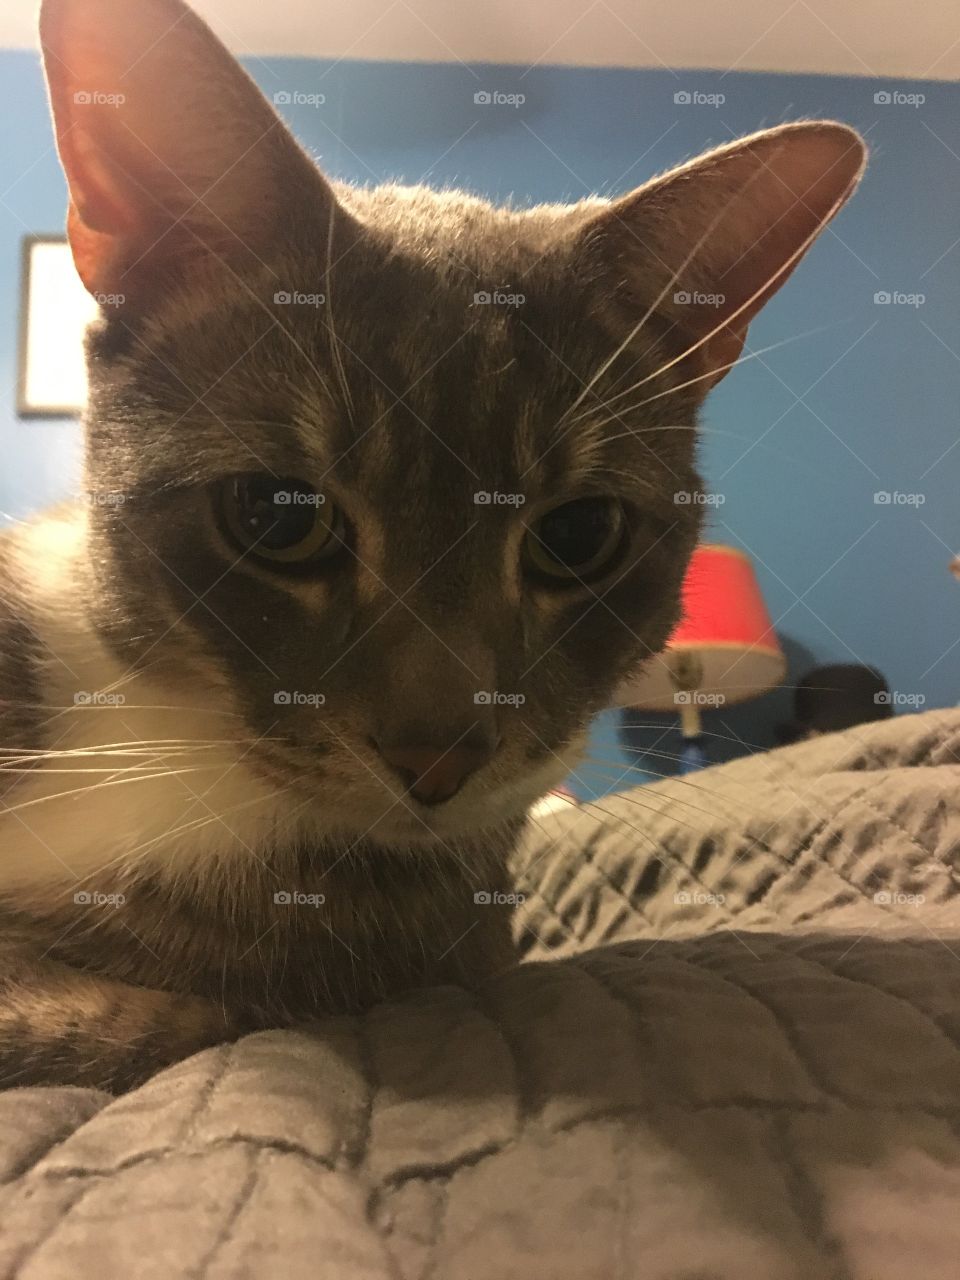 Cute young cat looking at camera